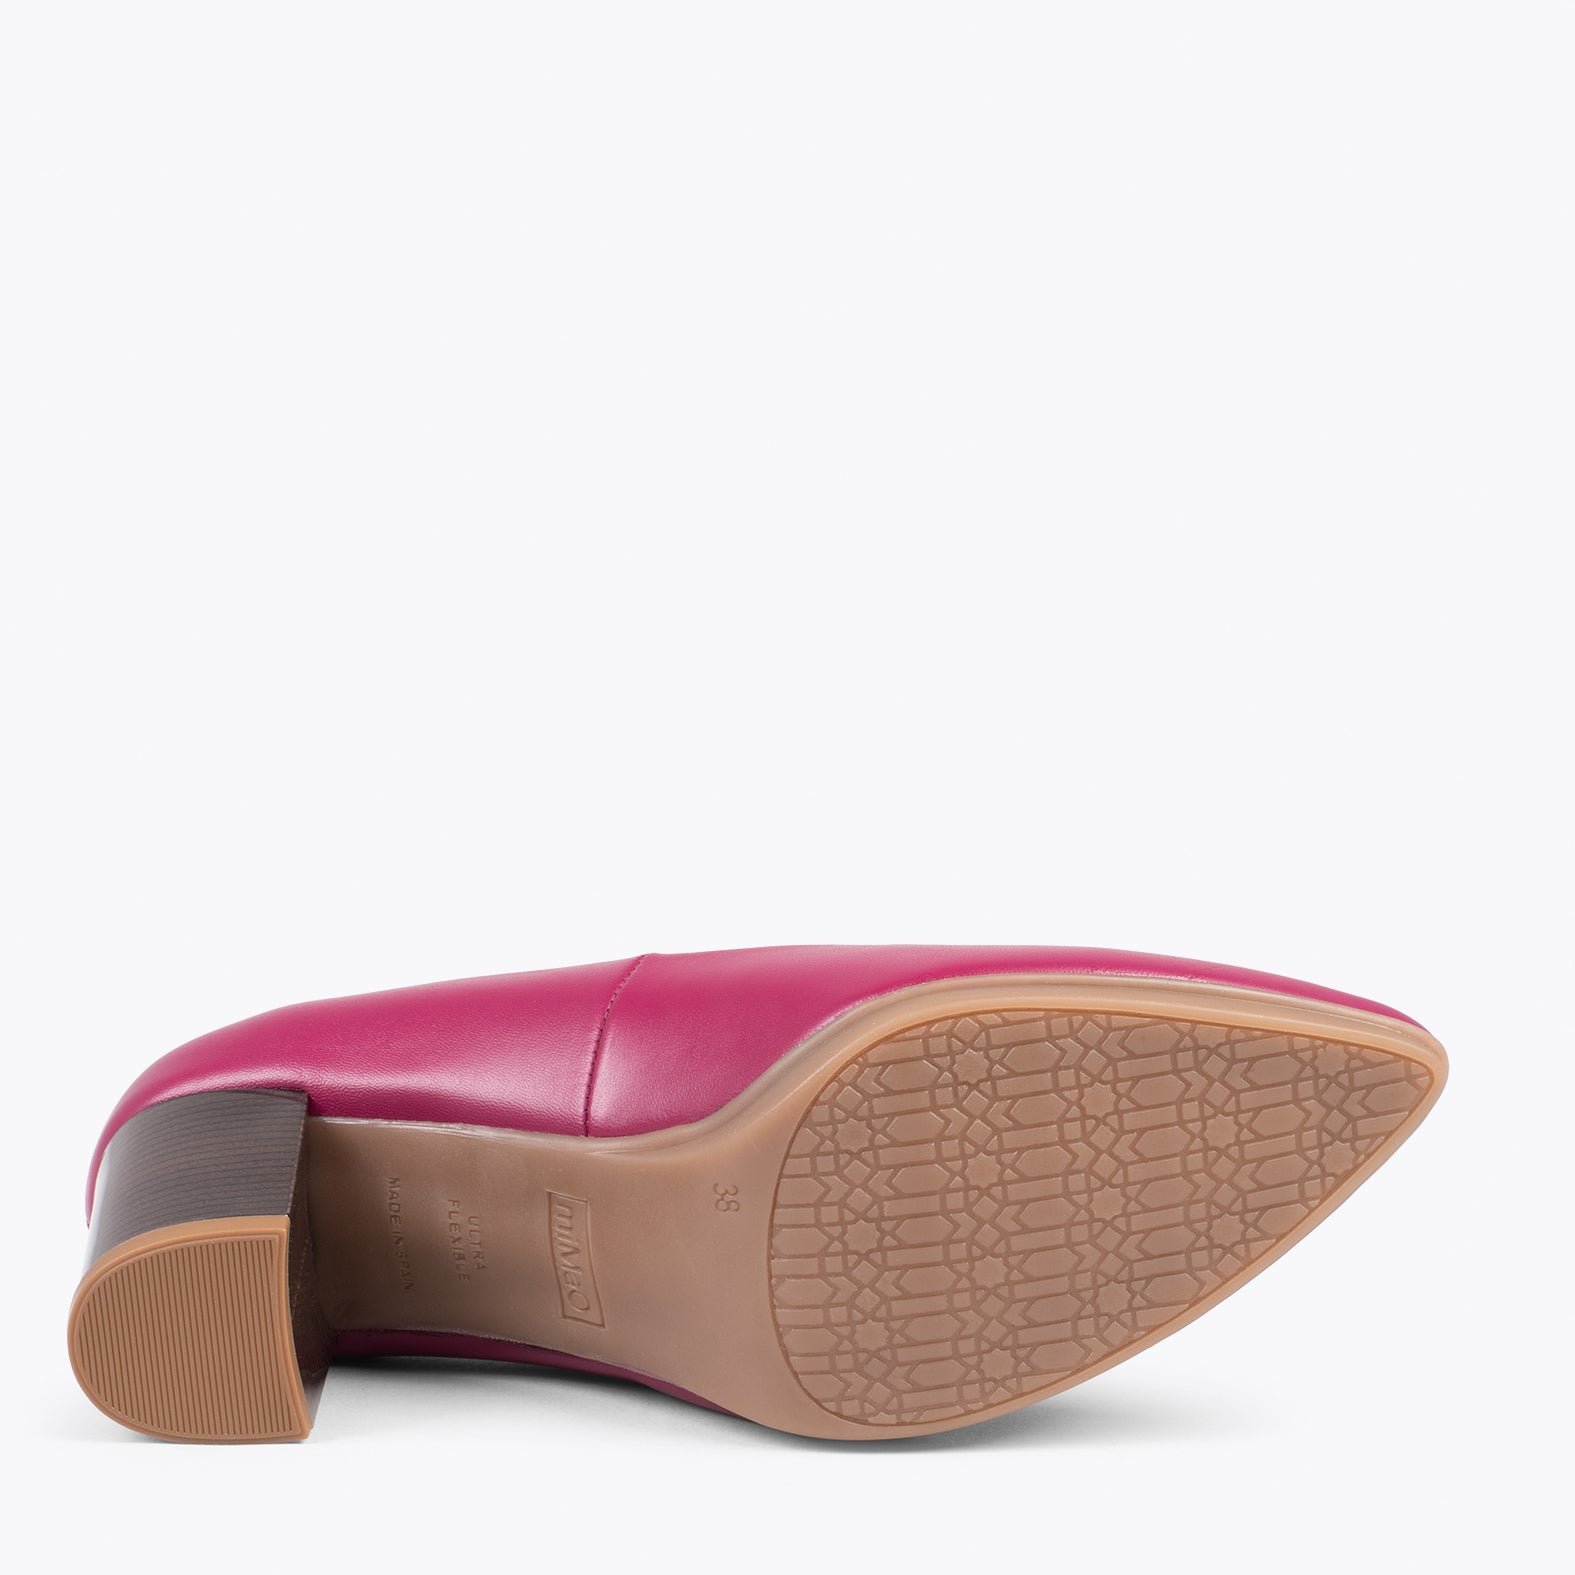 URBAN S SALON – BURGUNDY nappa leather mid heels